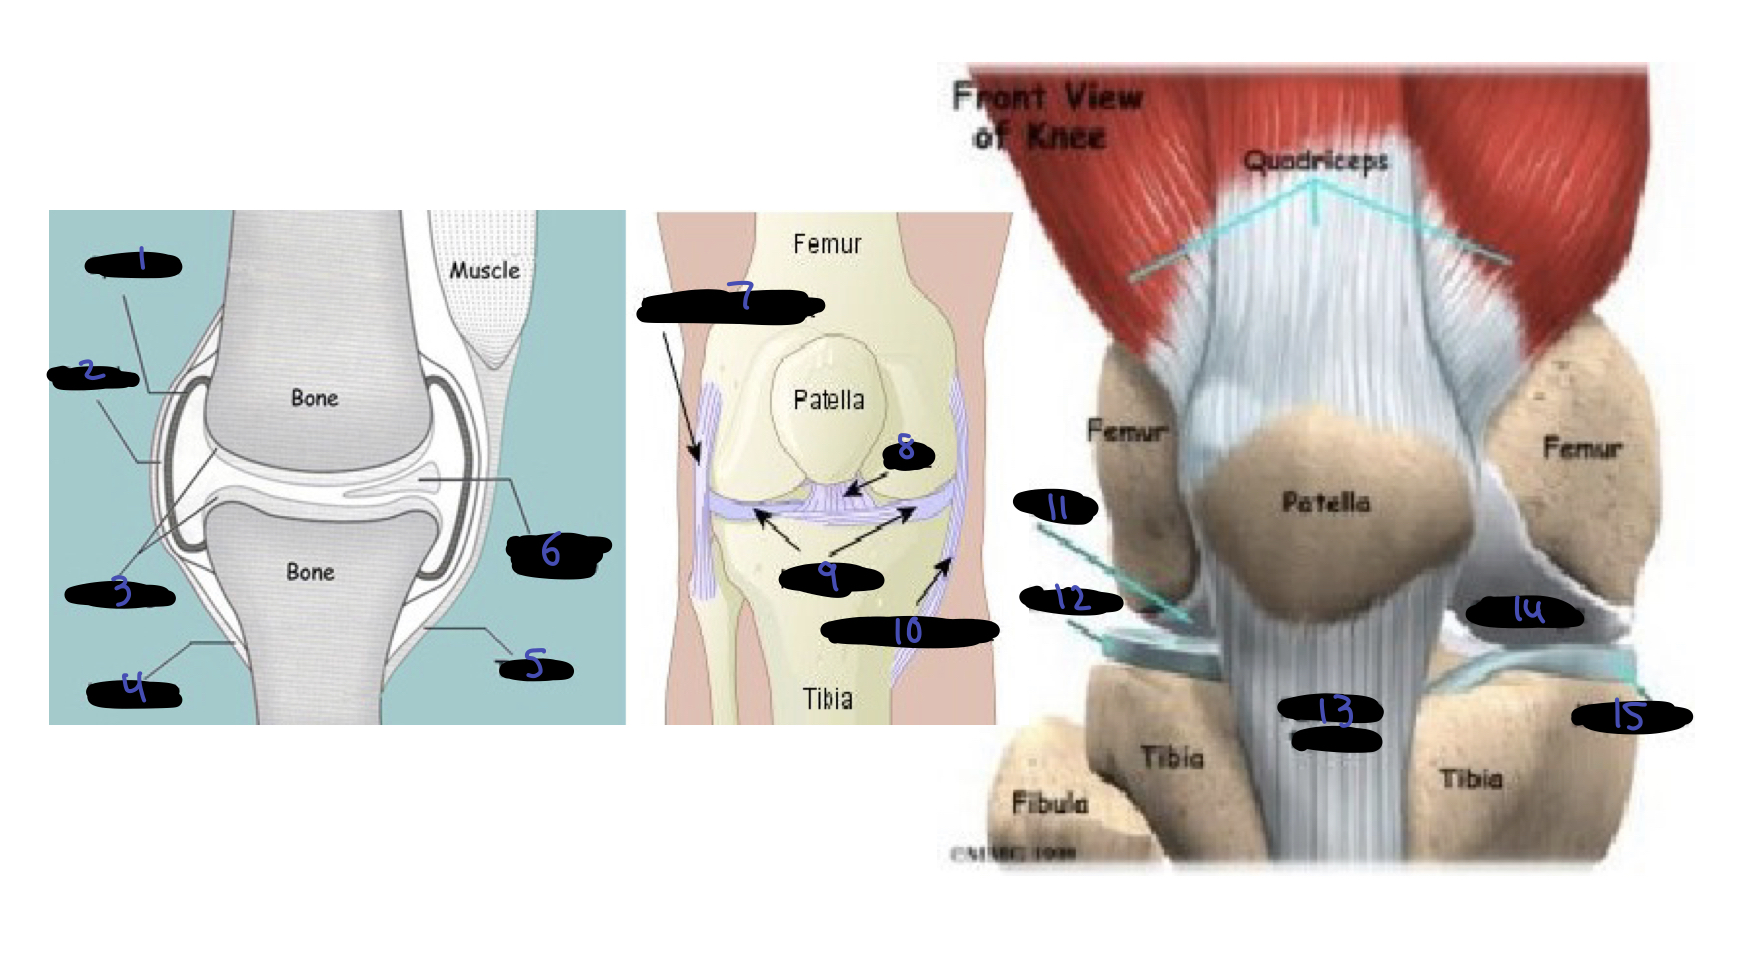 <ol><li><p>synovium</p></li><li><p>capsule</p></li><li><p>cartilage</p></li><li><p>ligament</p></li><li><p>tendon</p></li><li><p>meniscus</p></li><li><p>lateral ligament</p></li><li><p>ACL</p></li><li><p>meniscus</p></li><li><p>medial ligament</p></li><li><p>cartilage</p></li><li><p>meniscus</p></li><li><p>patellar tendon</p></li><li><p>cartilage</p></li><li><p>meniscus</p></li></ol>